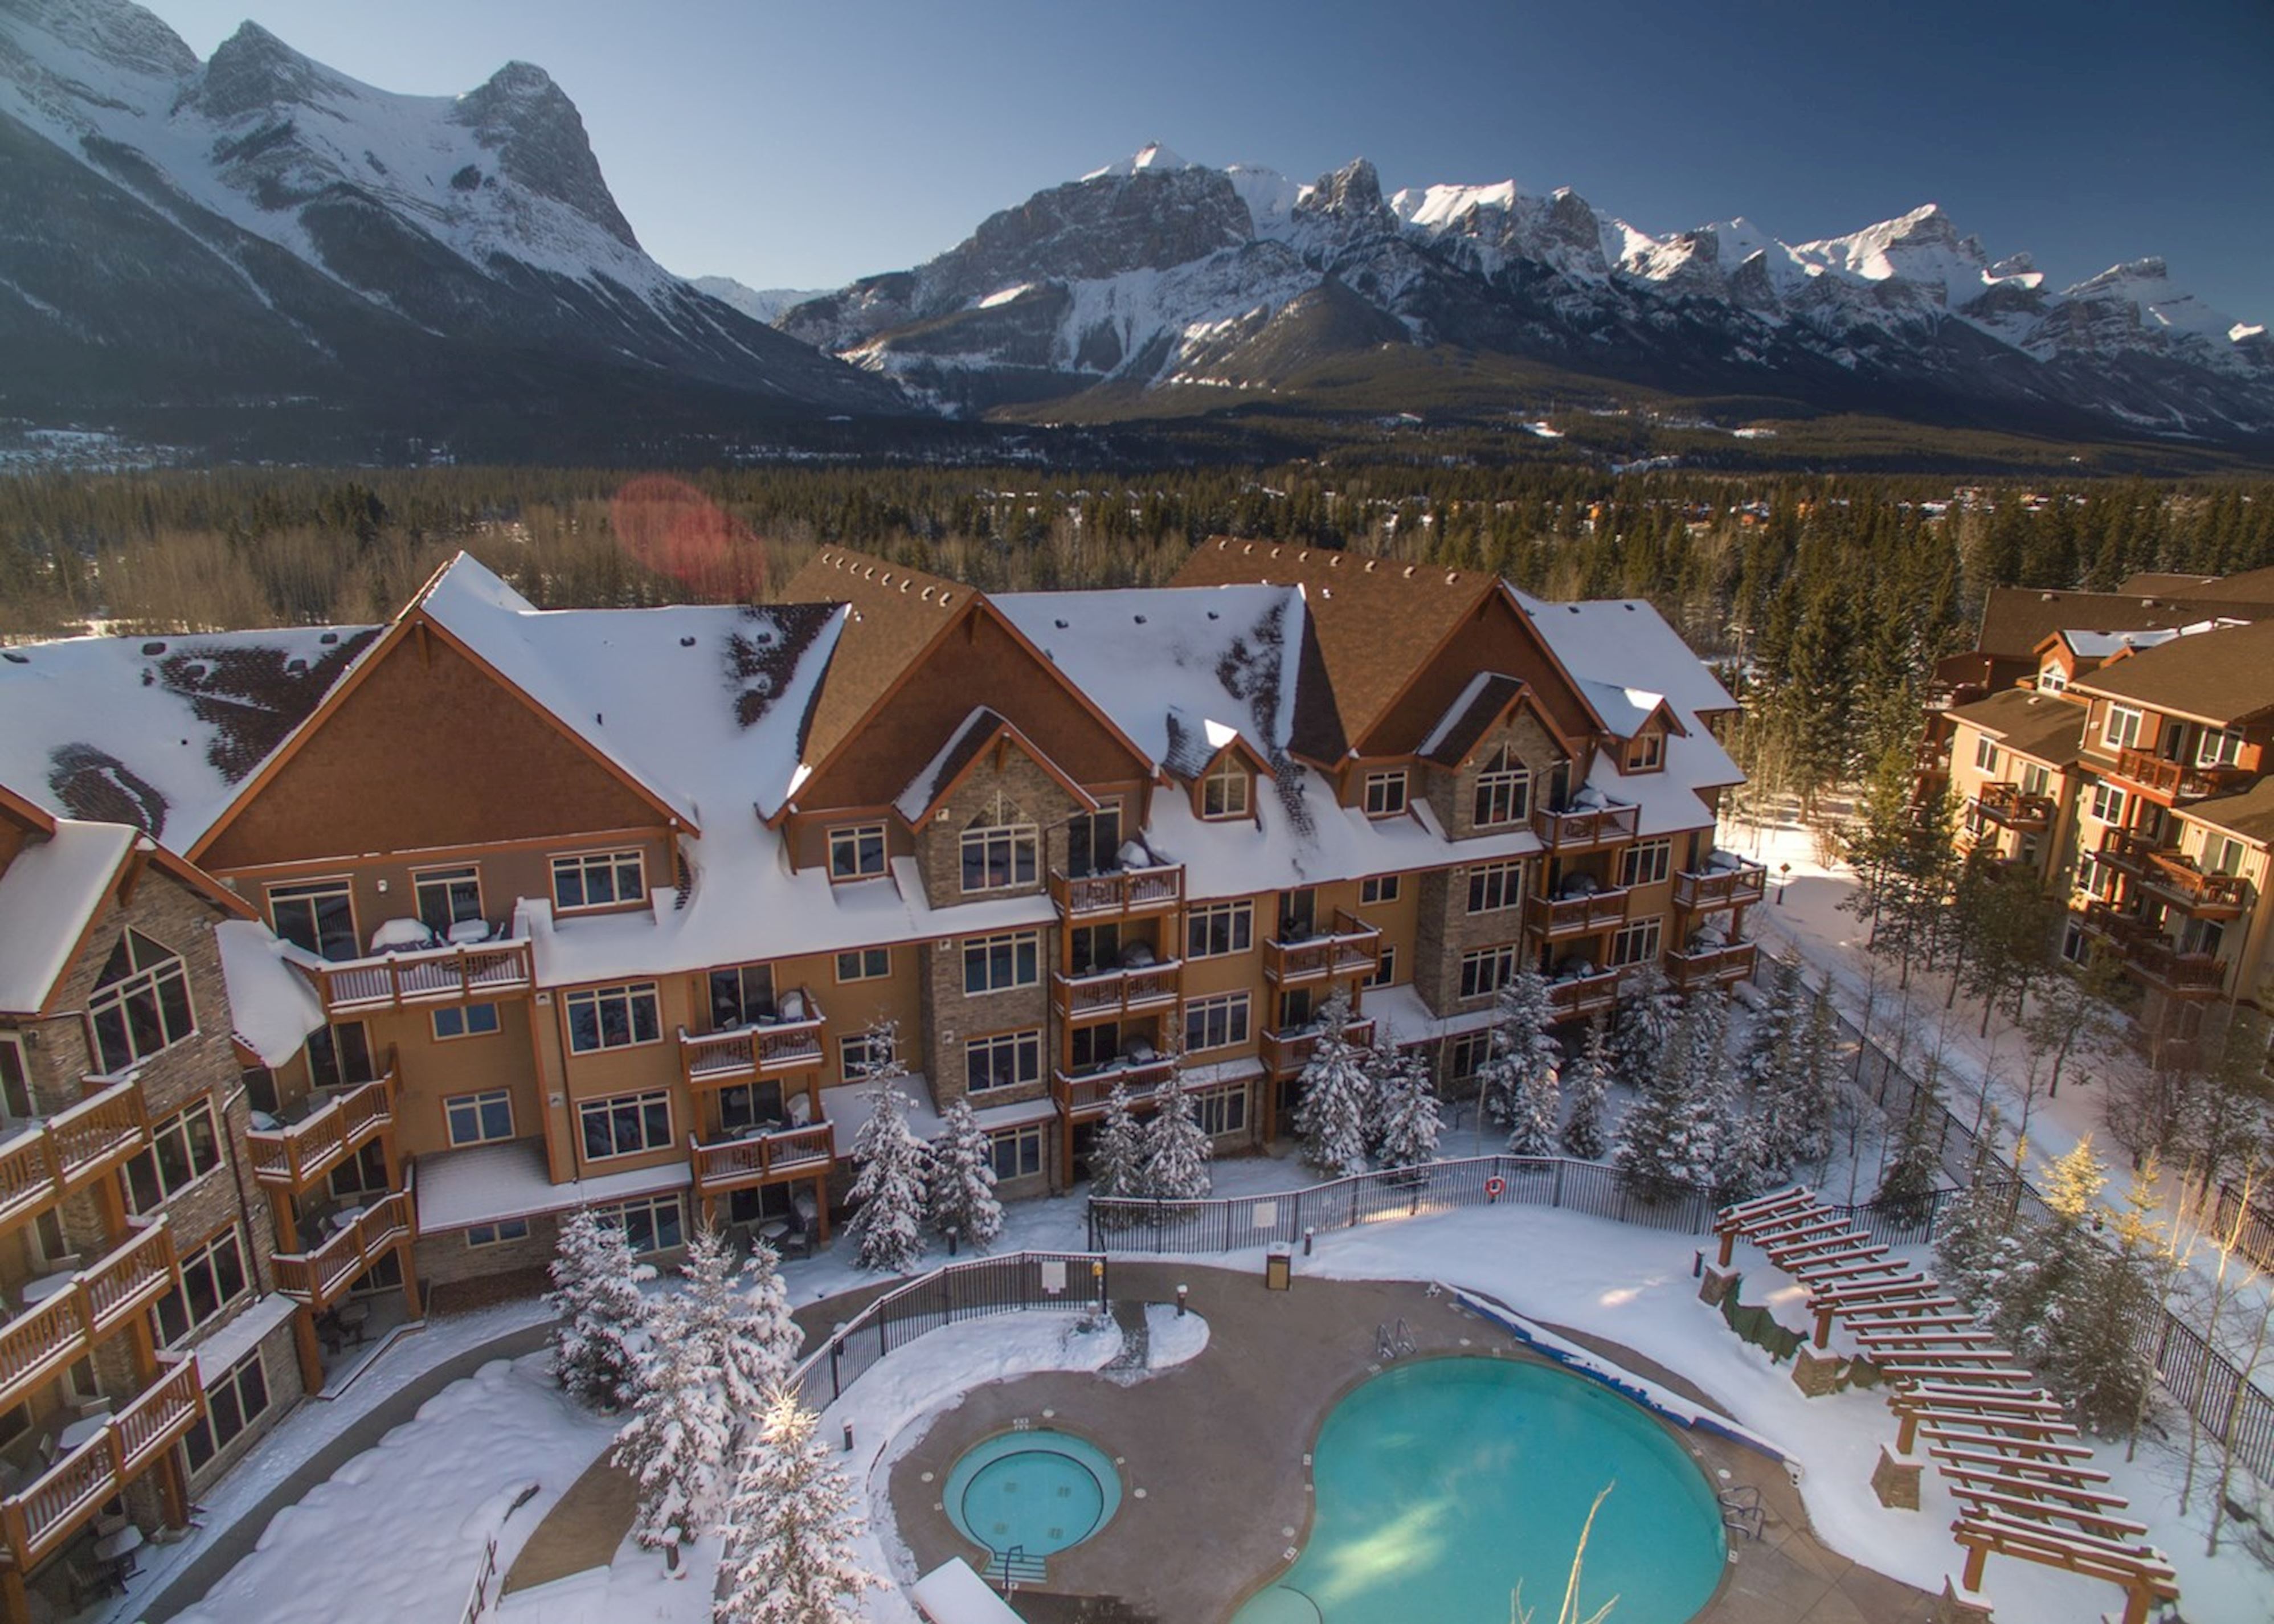 Mountain Retreats ski area rental homes